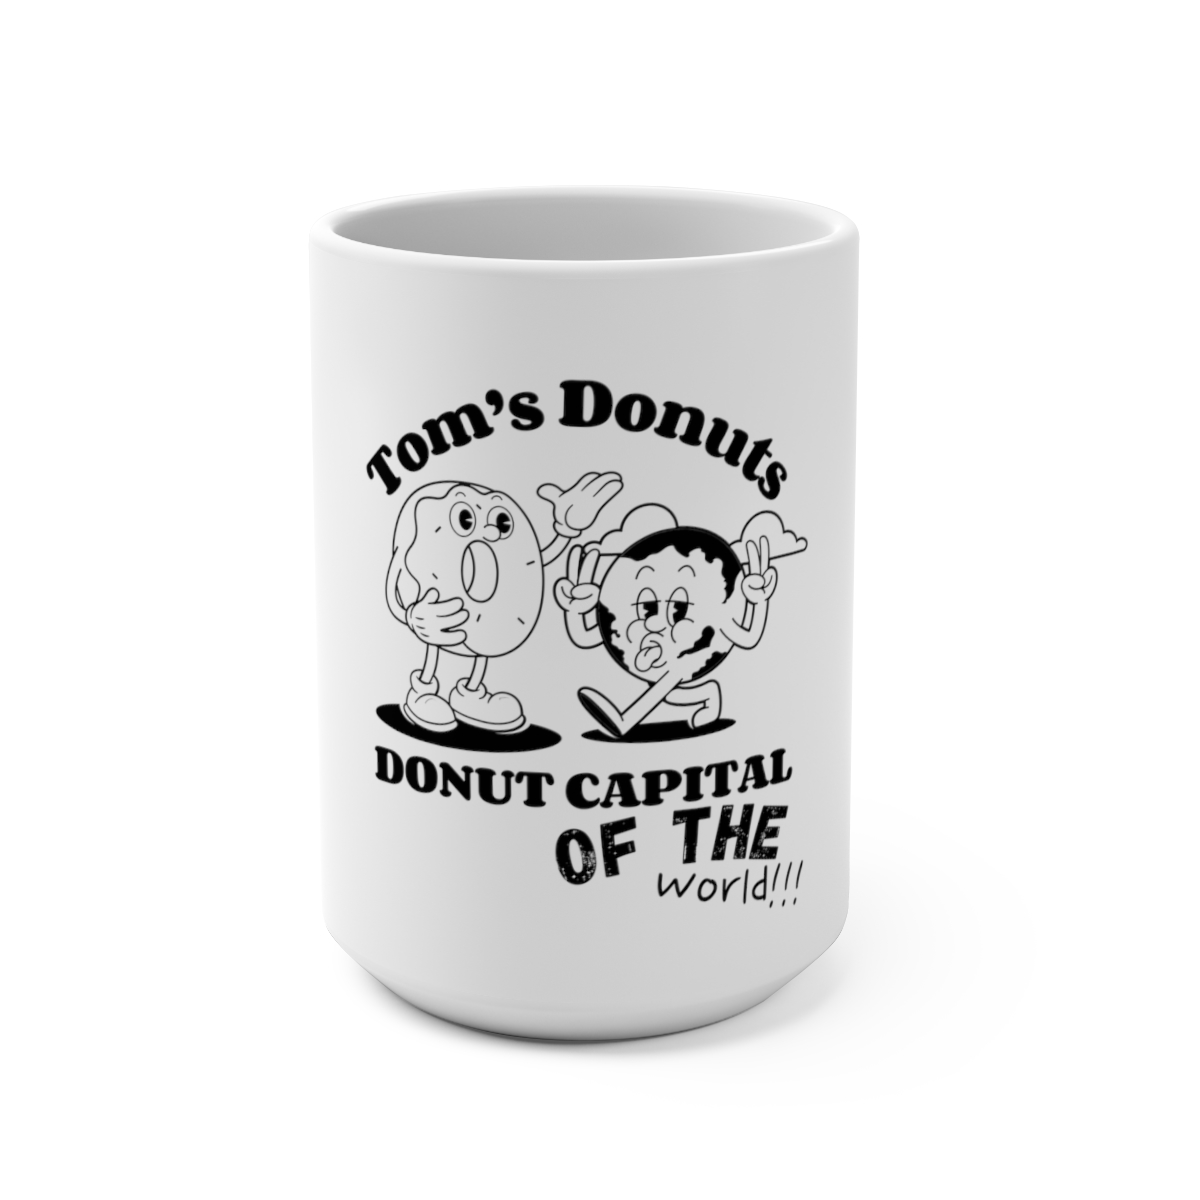 Tom’s Donuts Original “Donut Capital of The World” Toon Mug 15oz